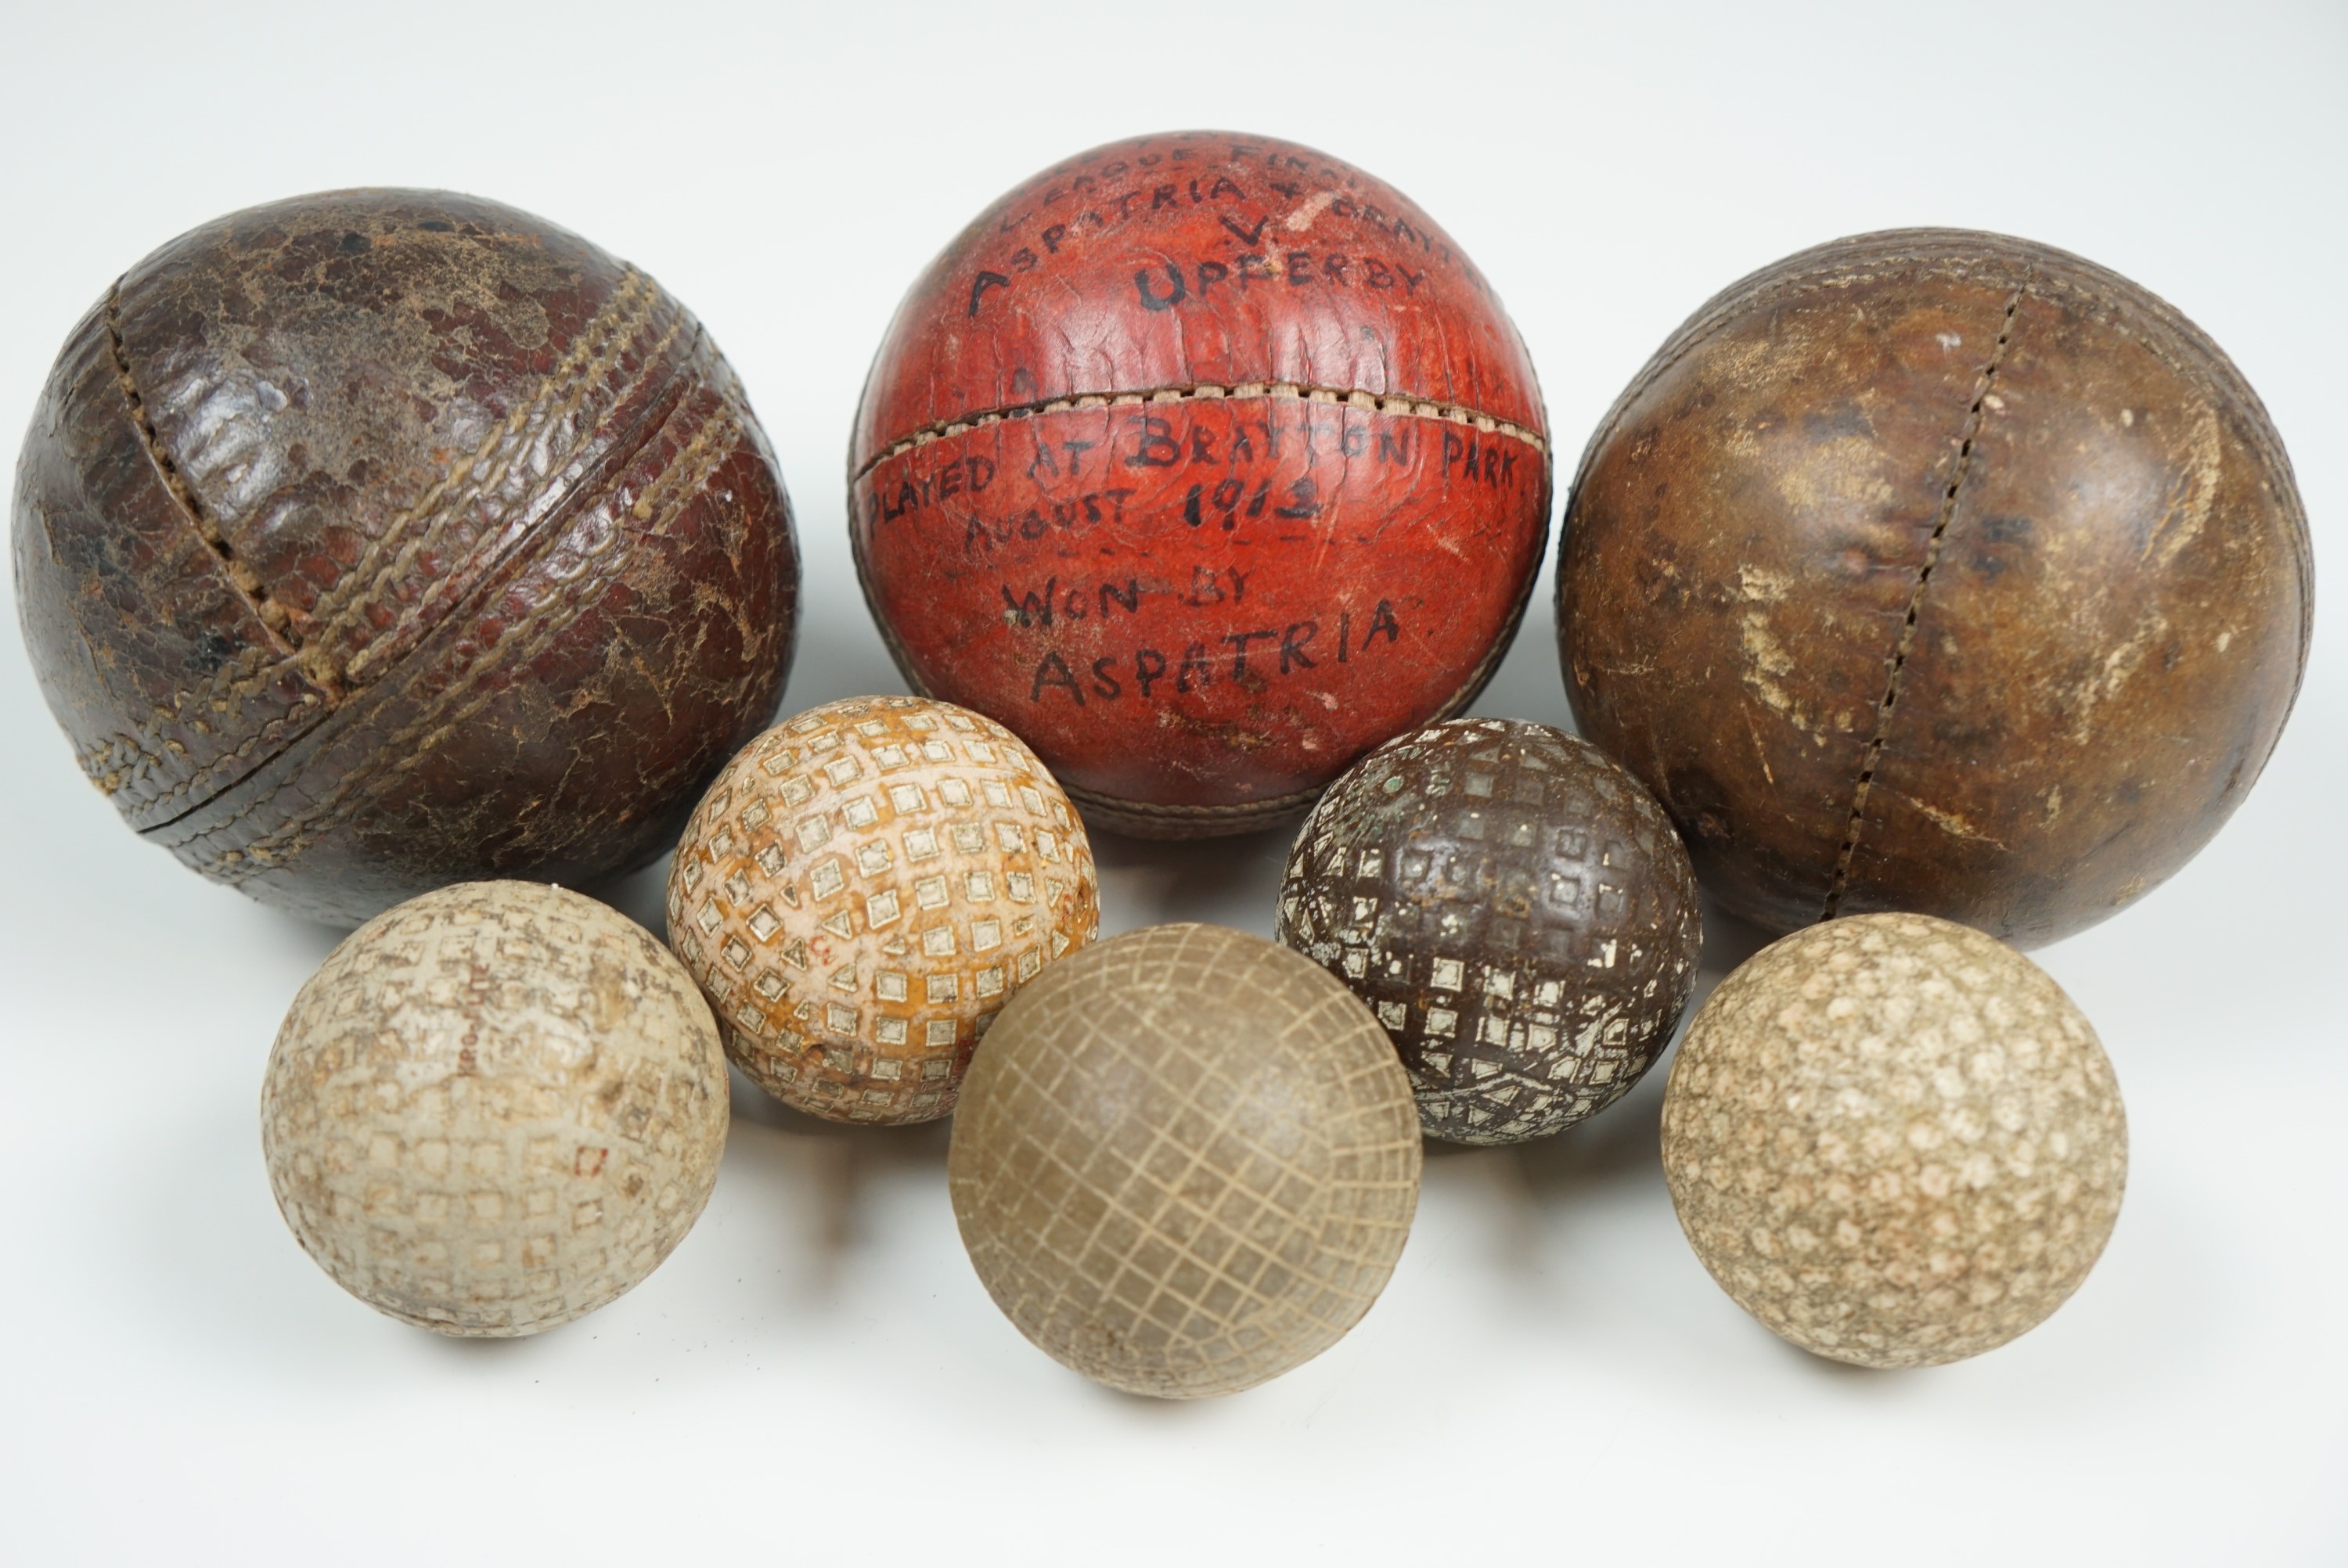 An Edwardian inscribed cricket ball, "Aspatria and Brayton v. Upperby", August 1913, two similar